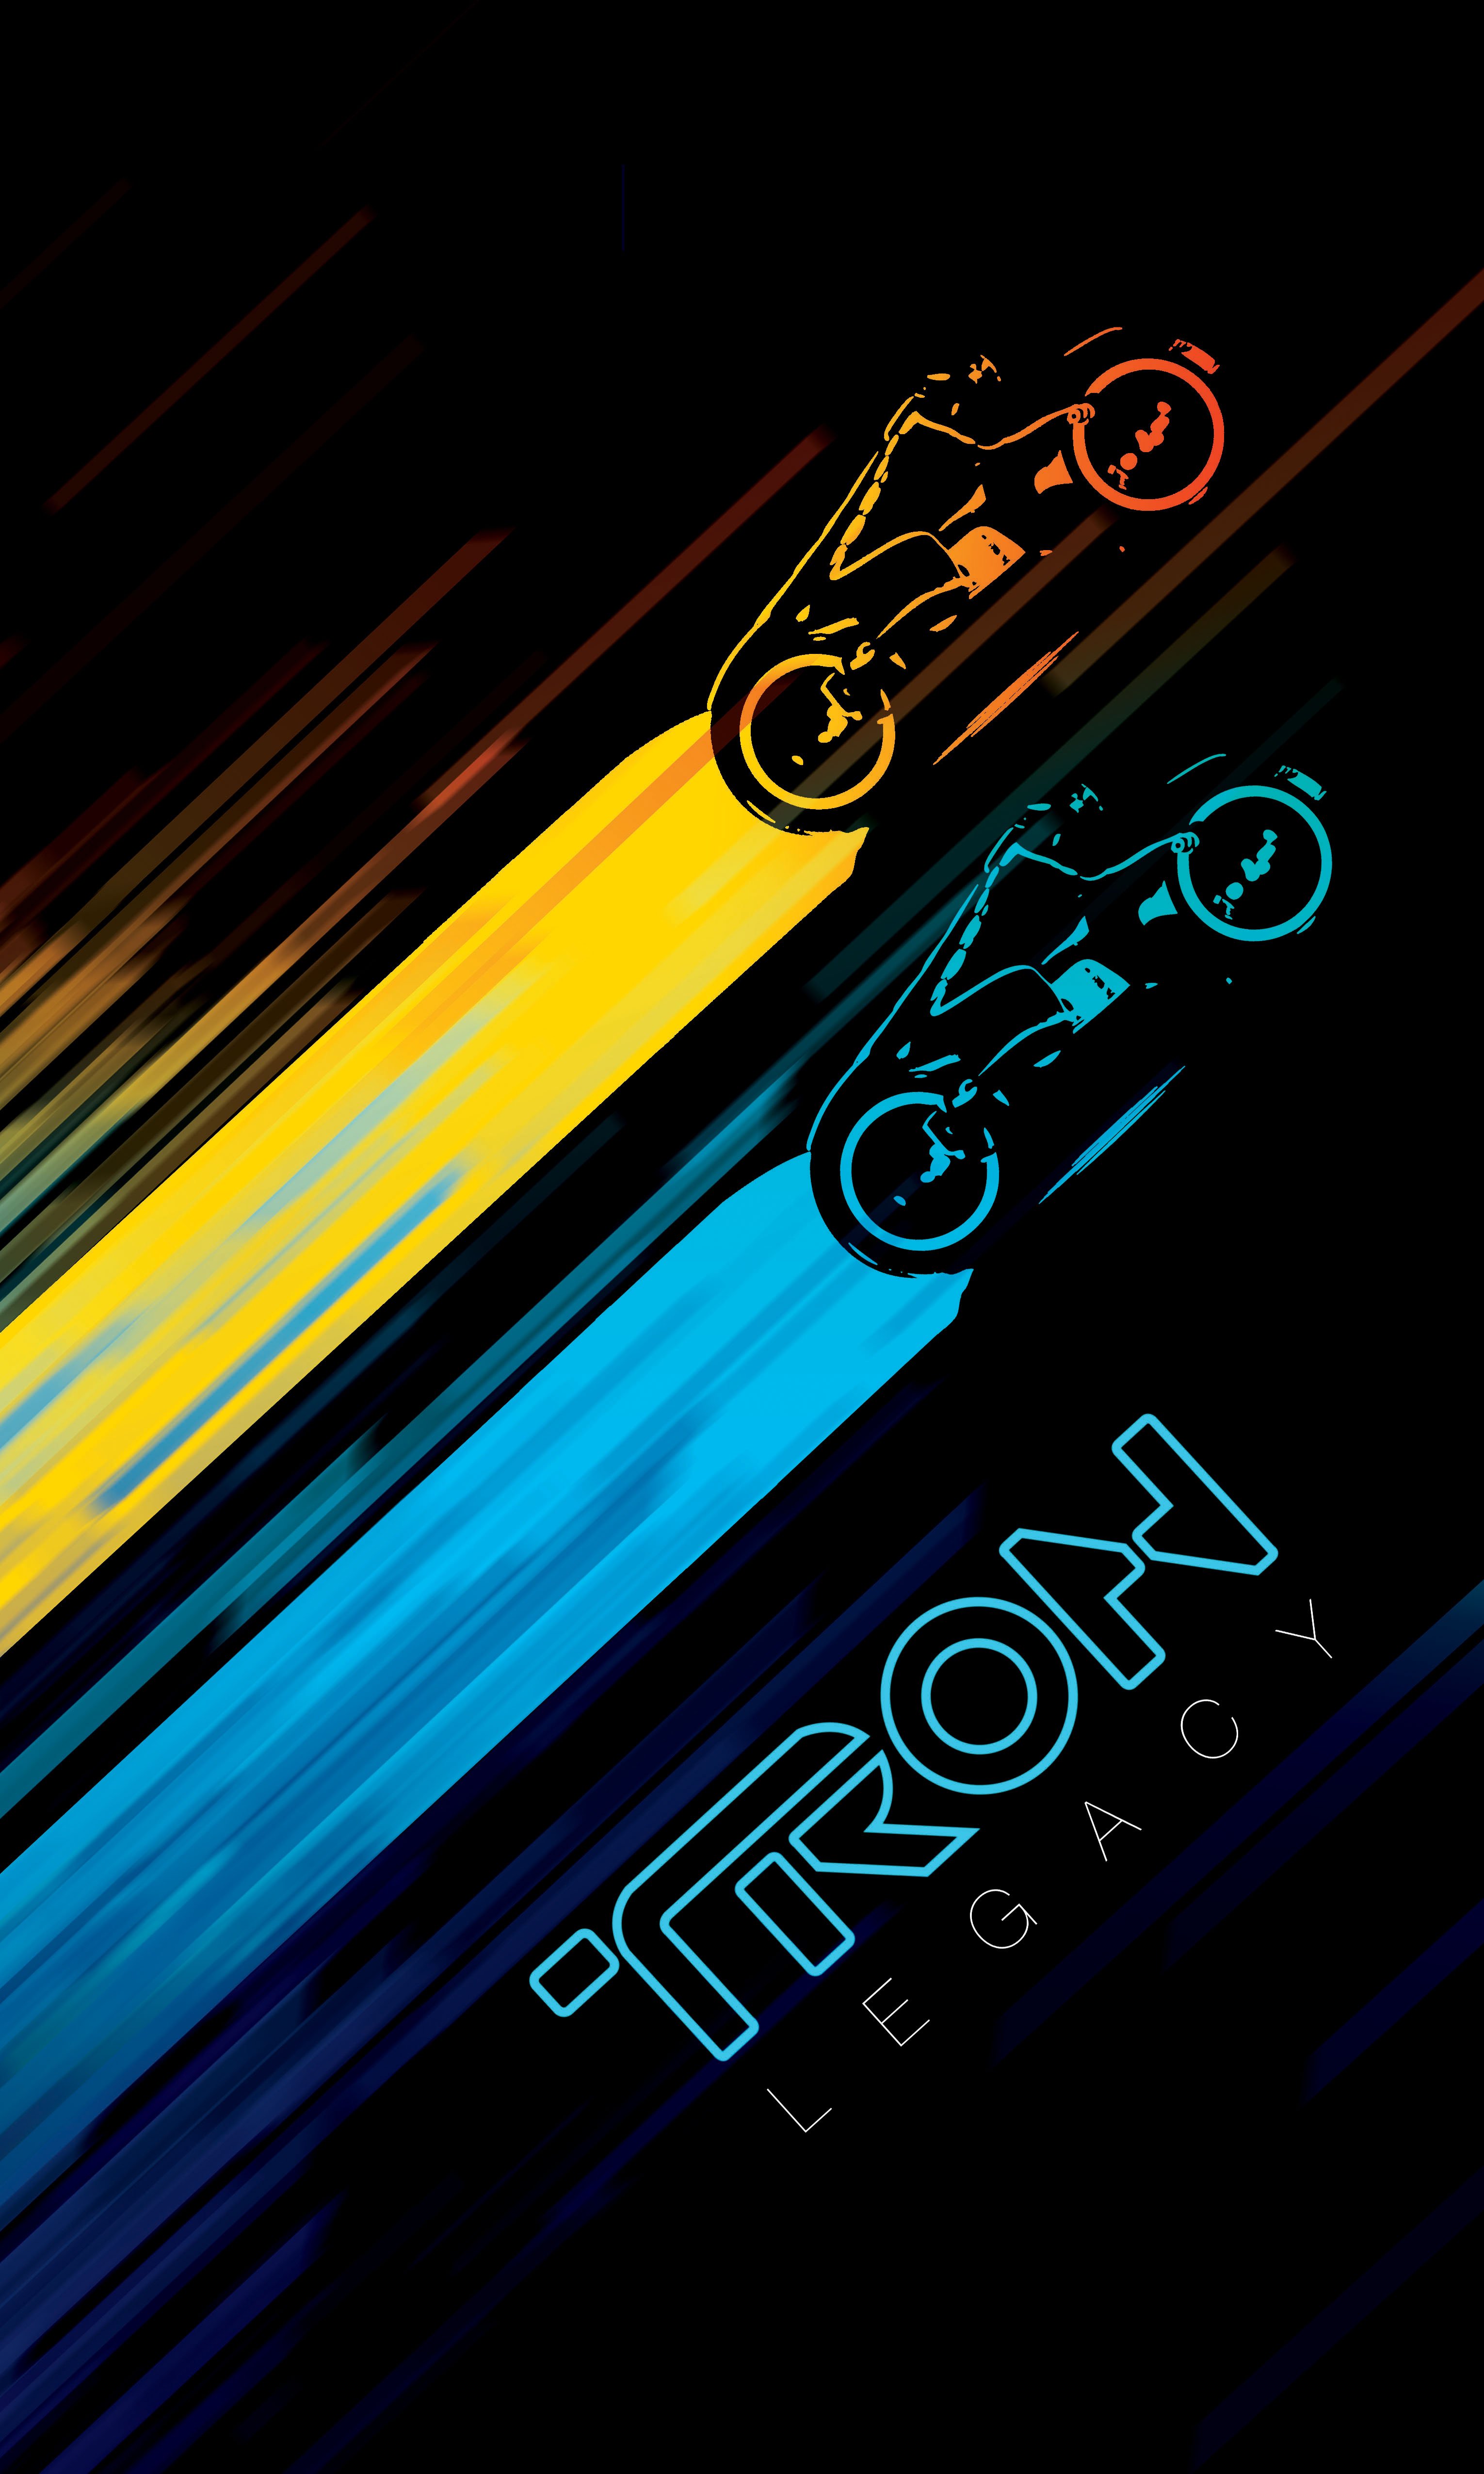 tron, Action, Adventure, Sci fi, Futuristic, Disney, Poster Wallpaper